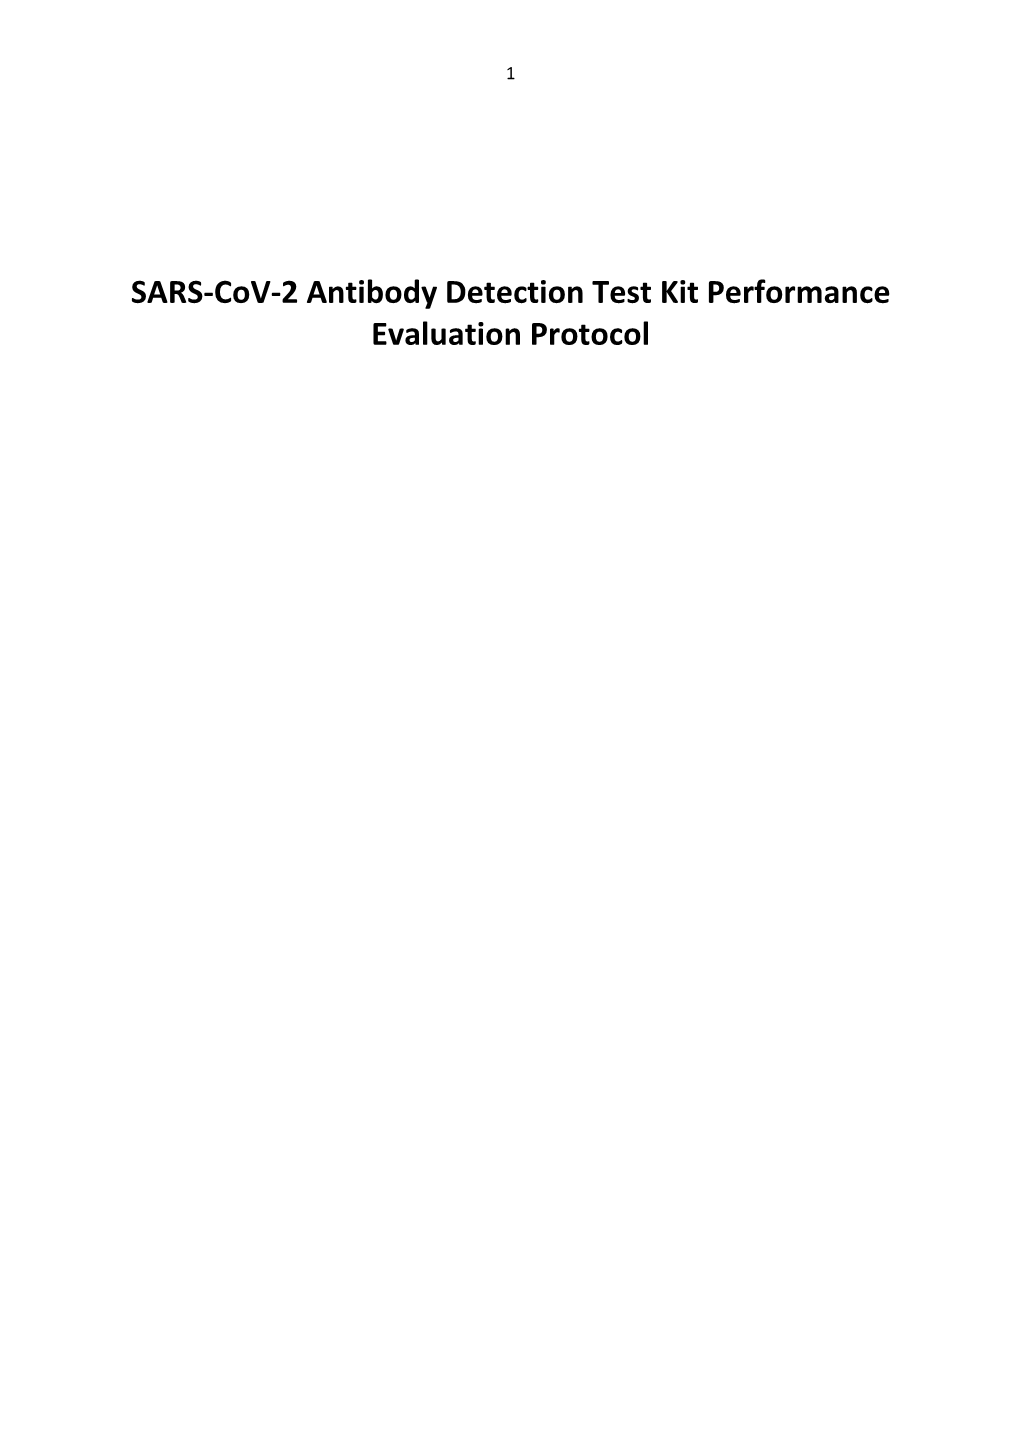 SARS-Cov-2 Antibody Detection Test Kit Performance Evaluation Protocol